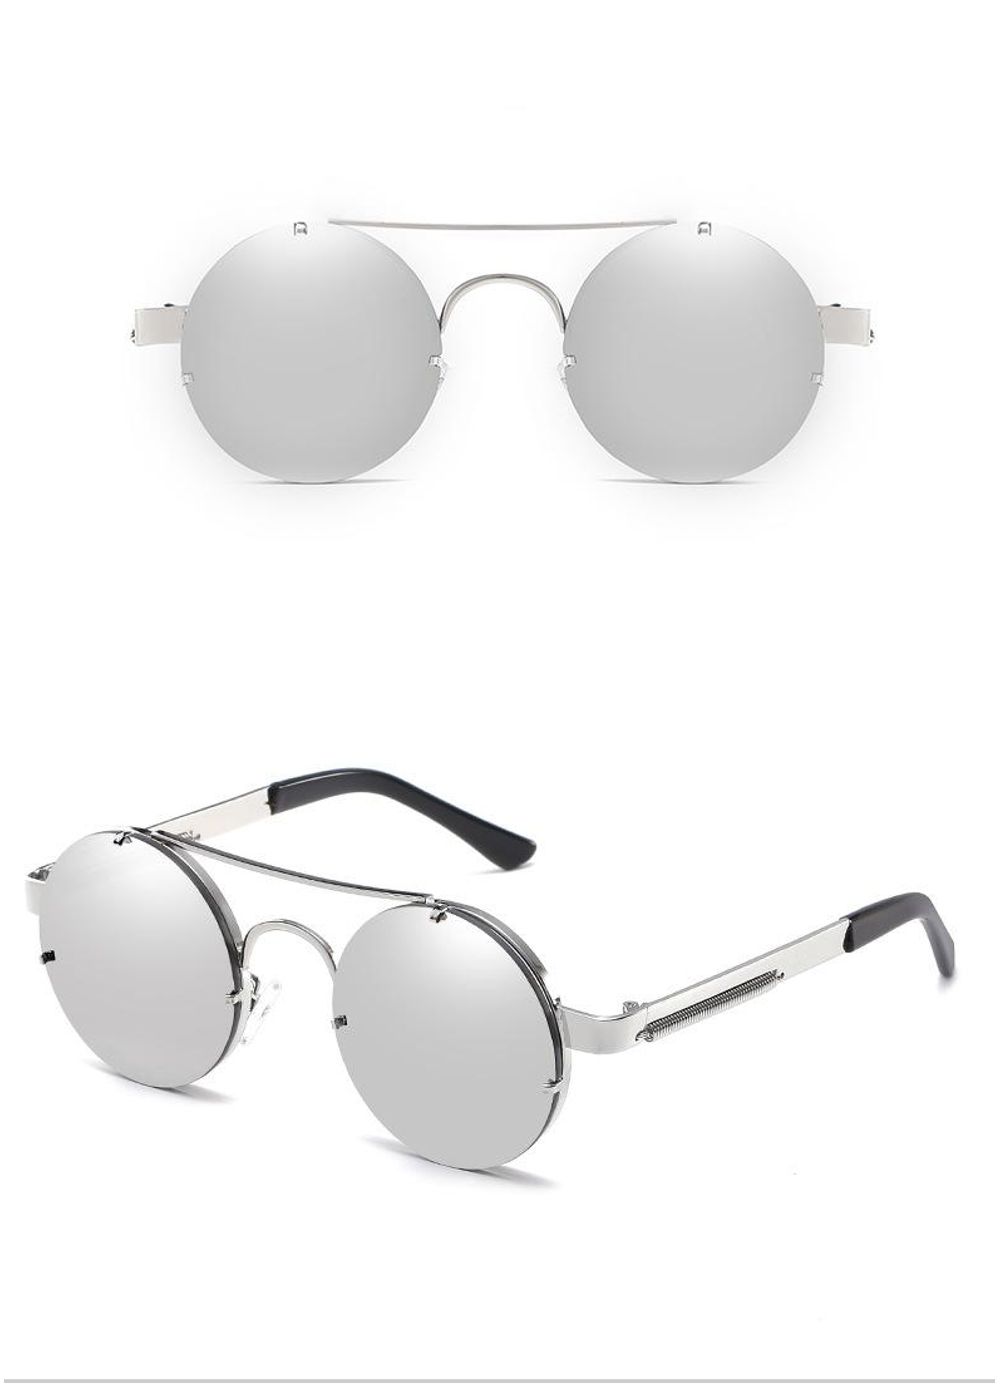 FENG X UV Protected Unisex Sunglasses